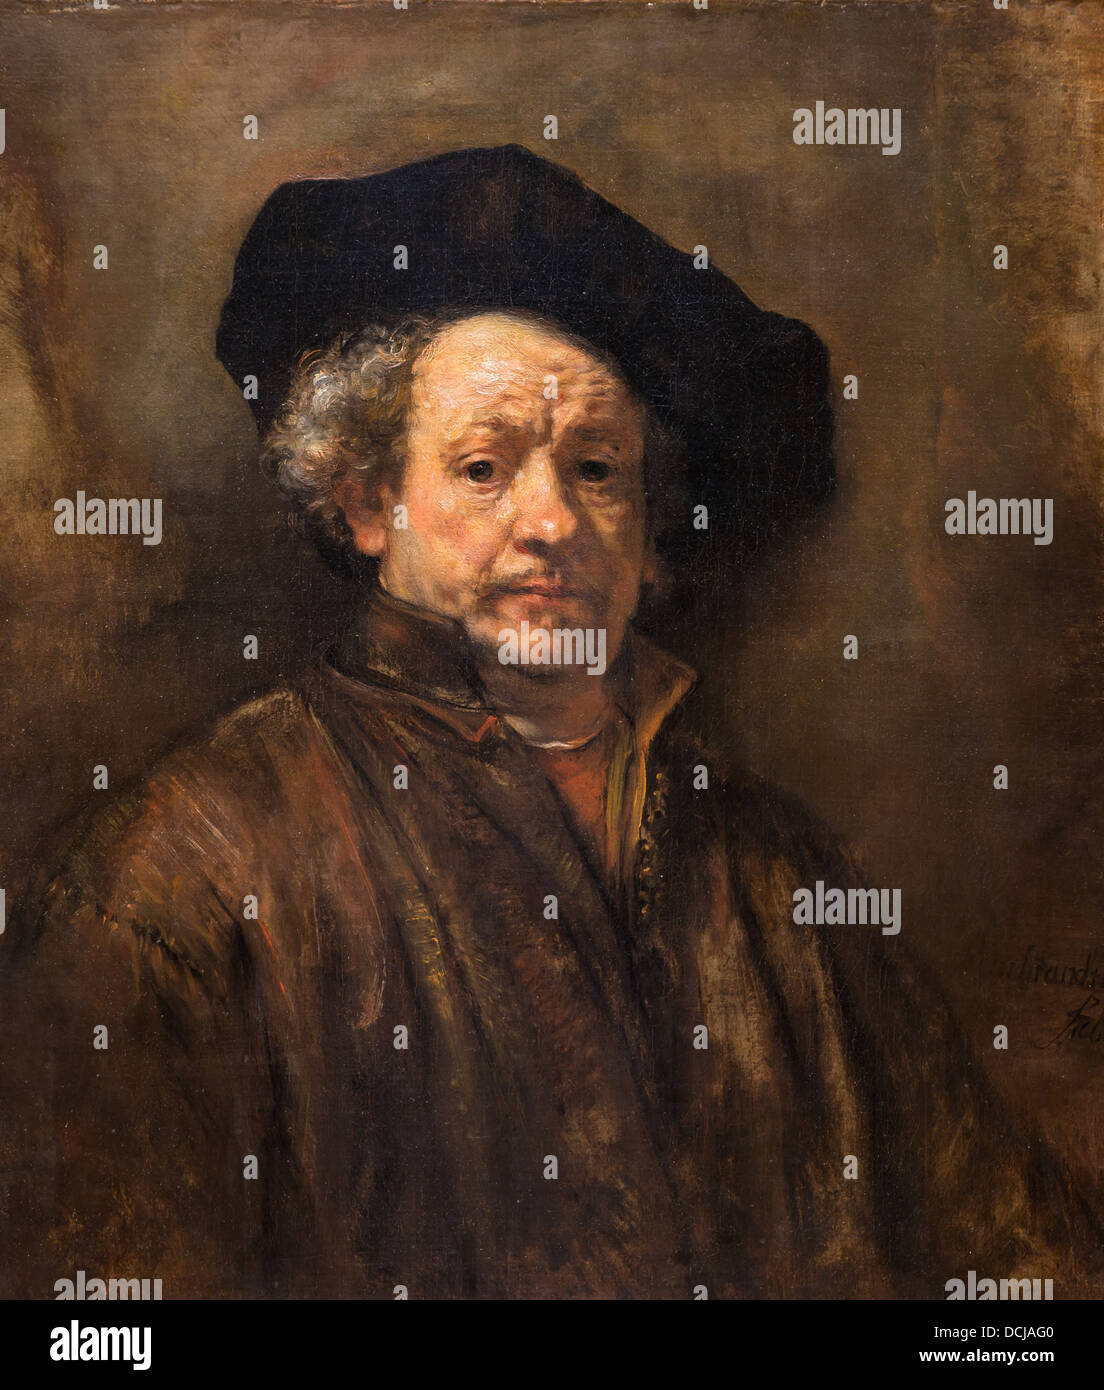 17th century  -  Self-portrait - Rembrandt (1660) - Metropolitan Museum of Art - New York Oil on canvas Stock Photo